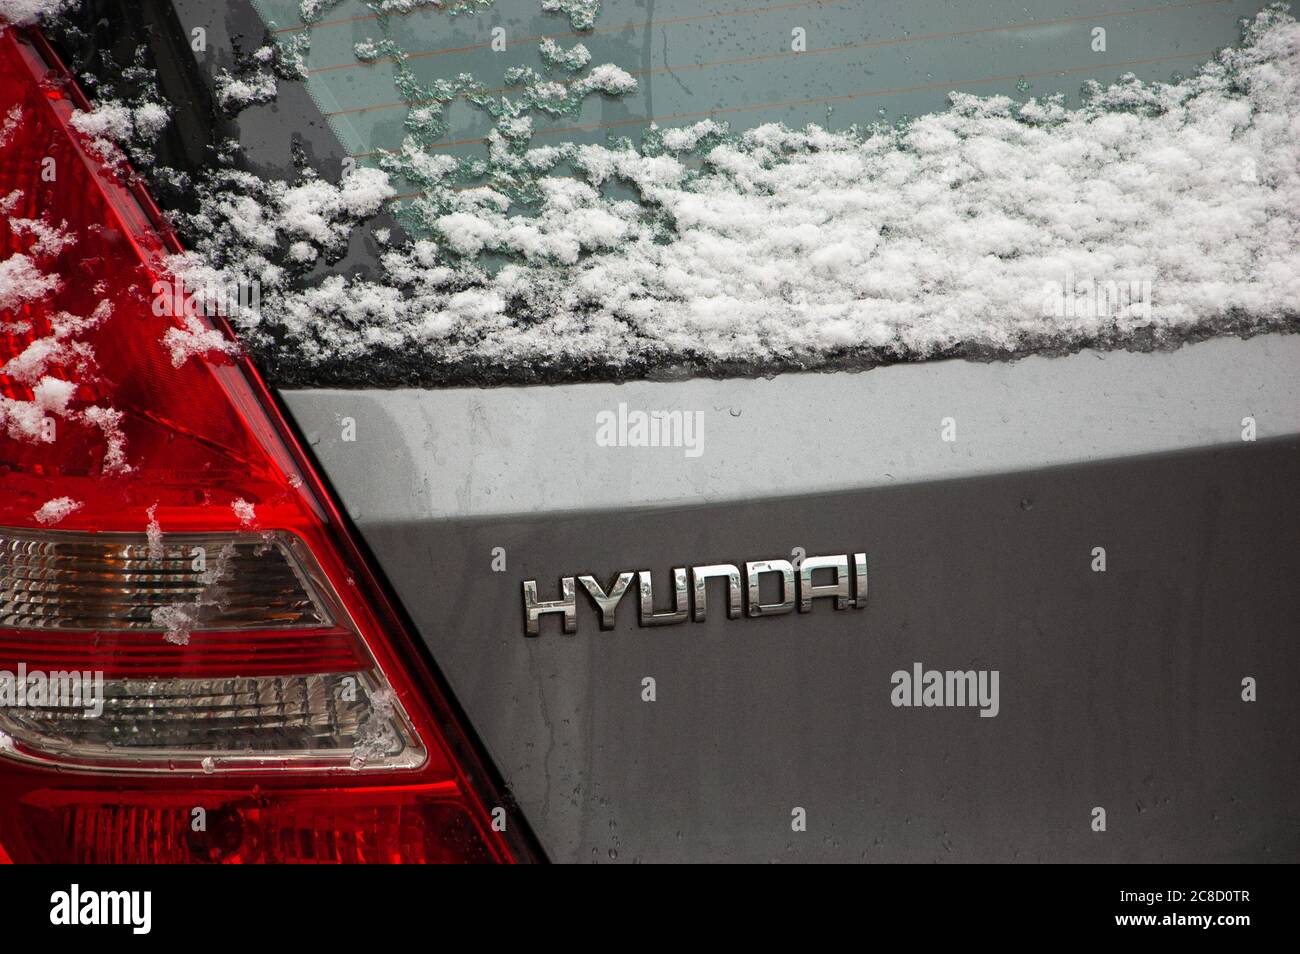 PARIS, FRANCE - FEBRUARY 5, 2018: Hyundai car under snow in rare snowy day in winter in Paris. Hyundai Motor Company, a South Korean multinational veh Stock Photo